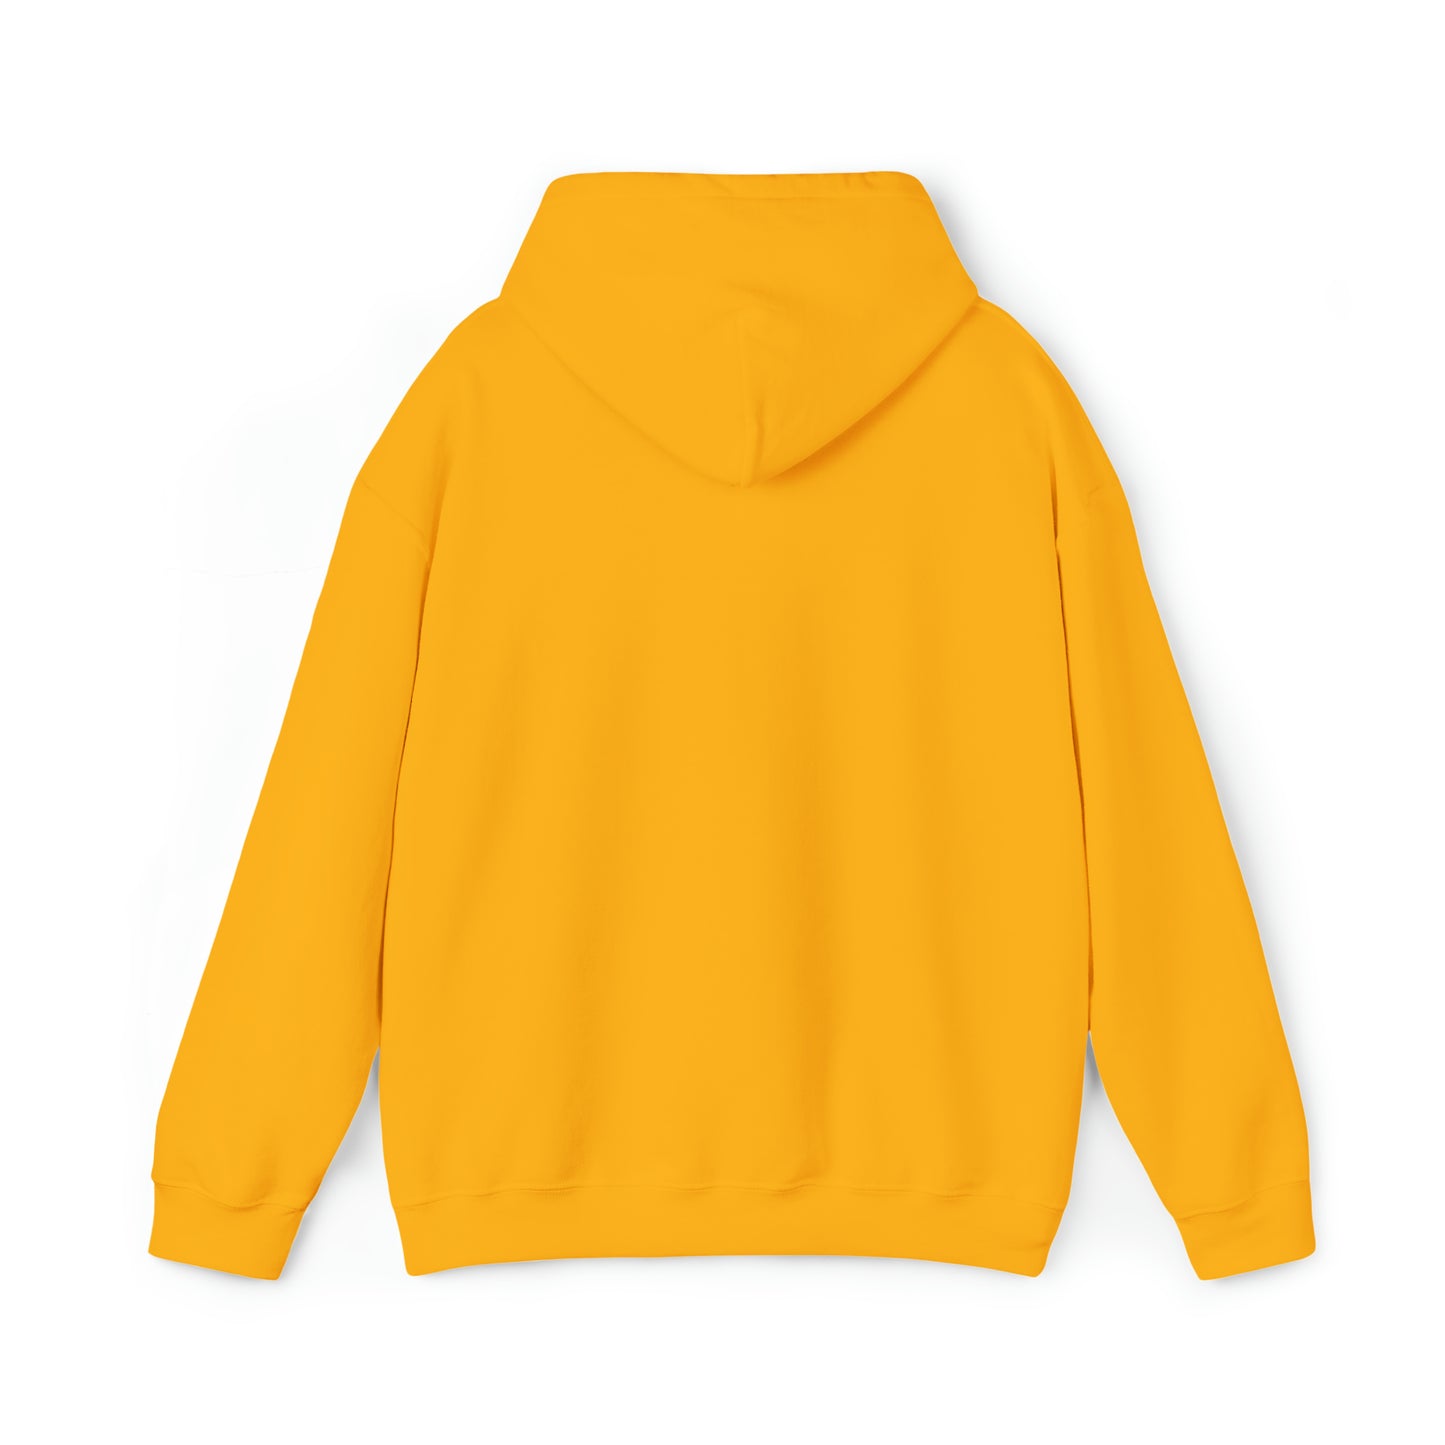 The Lady's Heavy Blend™ Hooded Sweatshirt